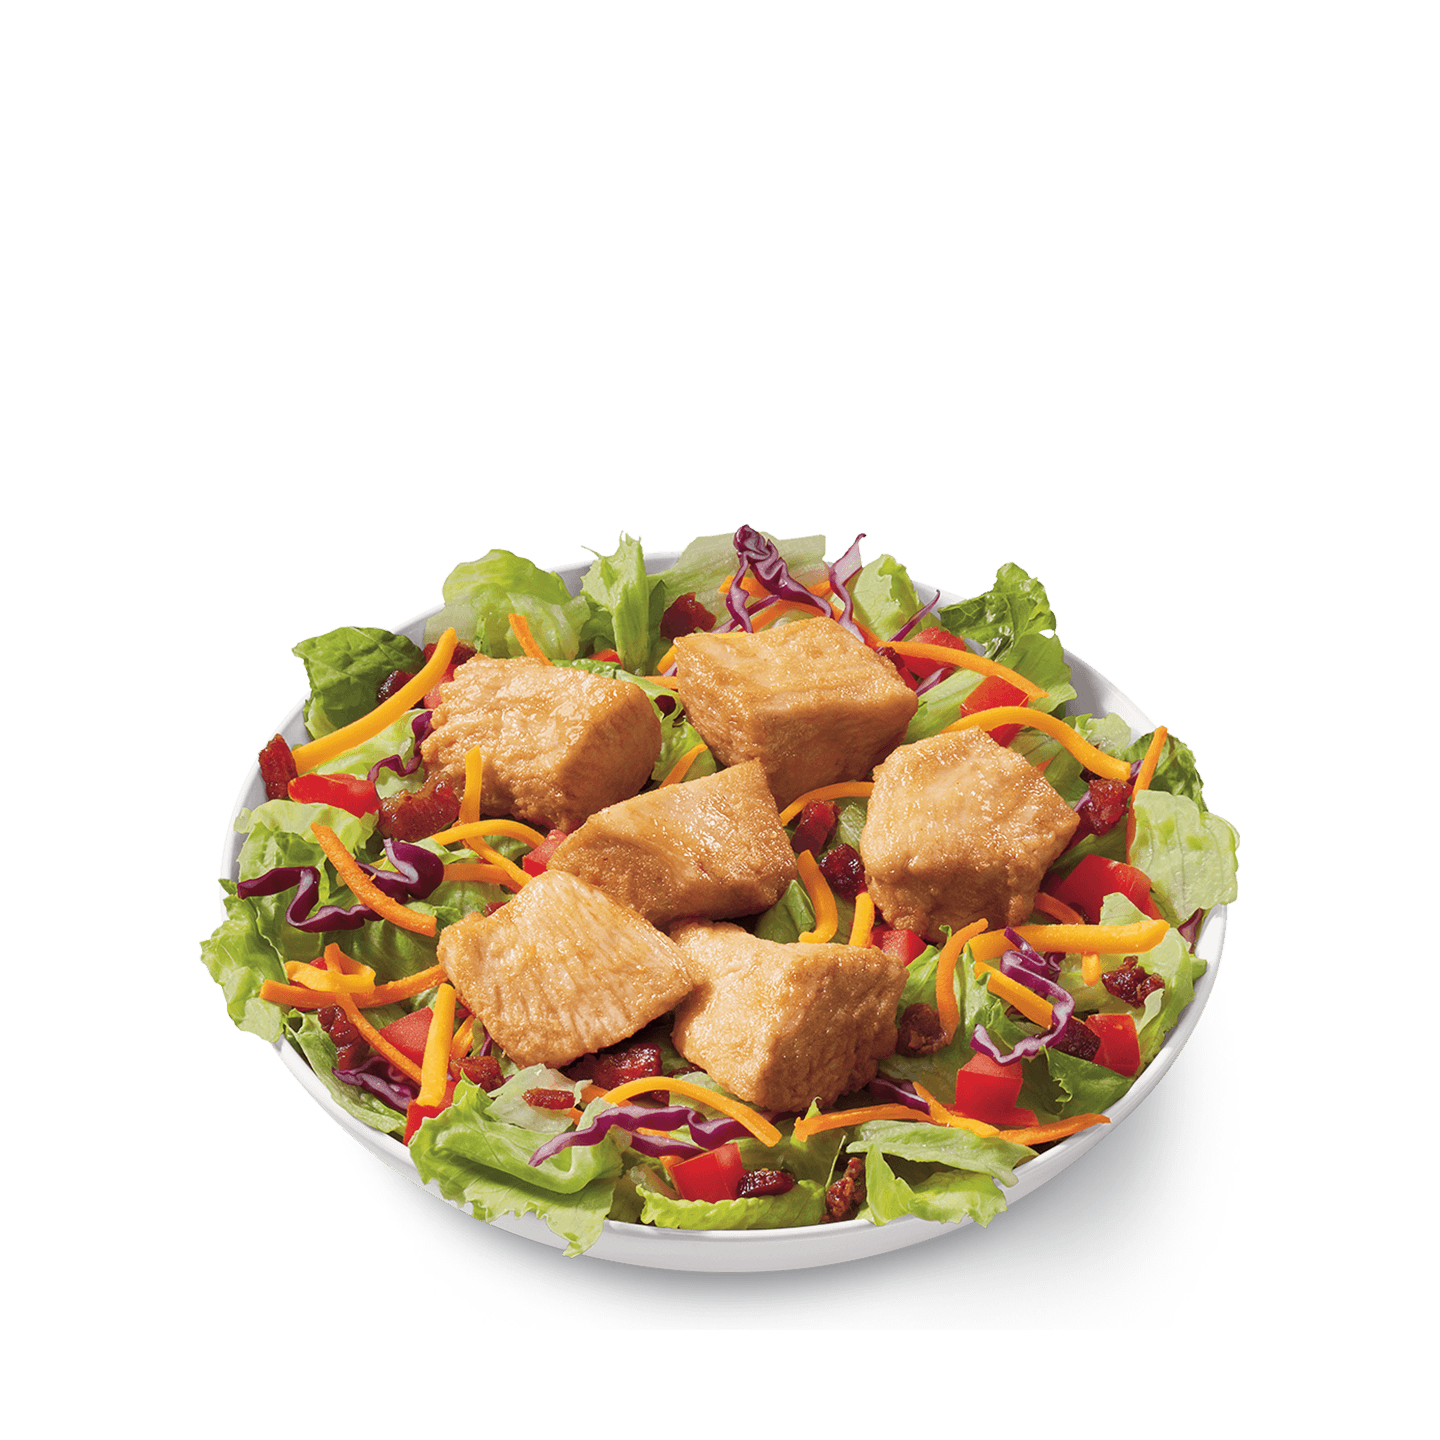 Dairy Queen Rotisserie-style Chicken Bites Salad Bowl Nutrition Facts